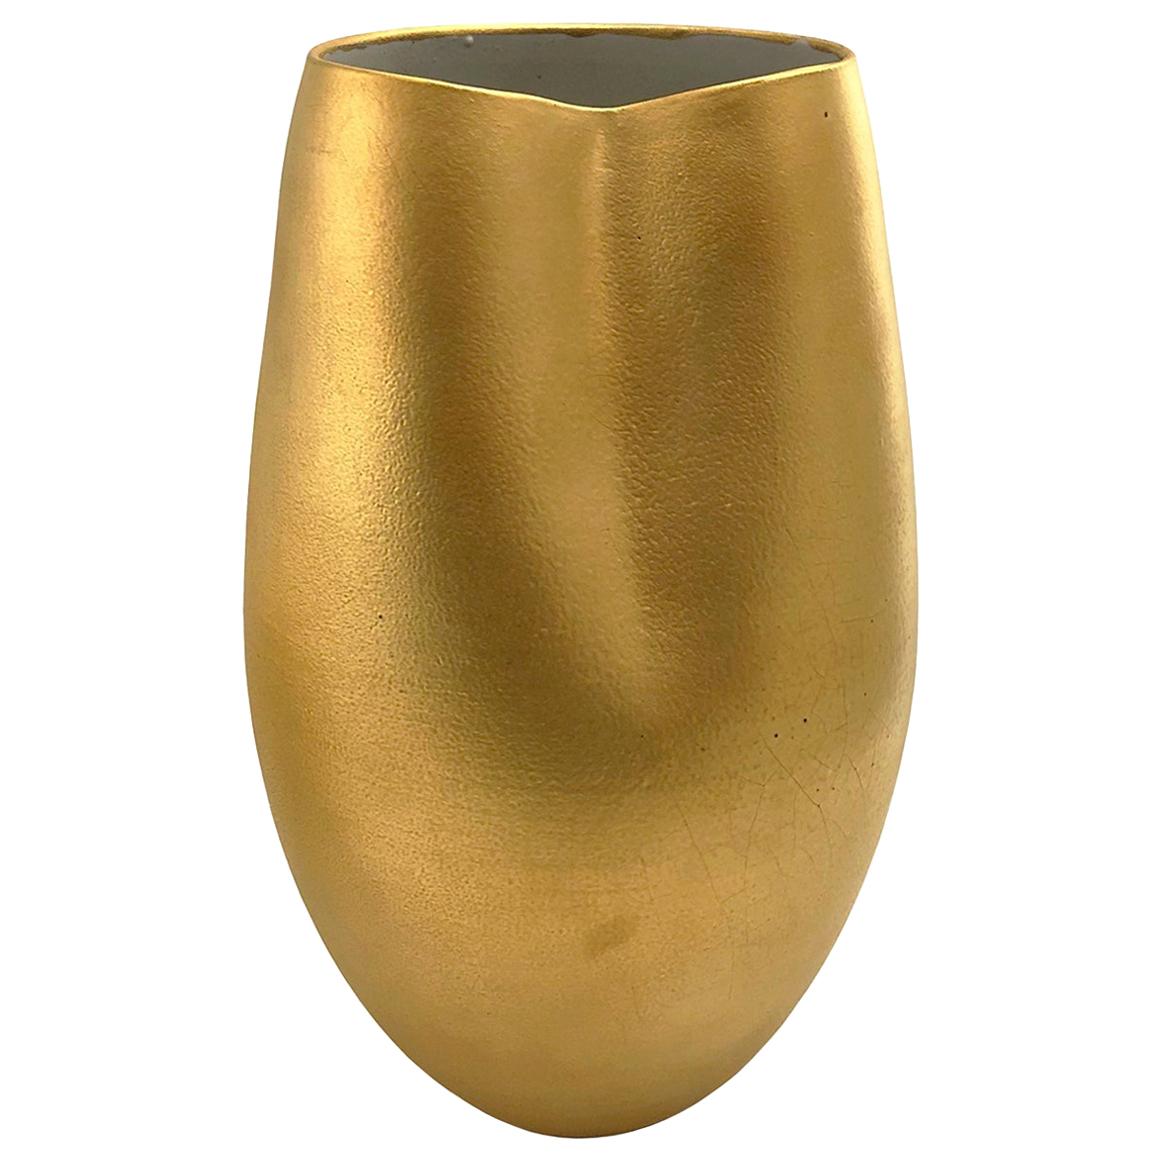 Wide Mouth Ceramic Vase in 22-Karat Matte Crackle Gold Glaze by Sandi Fellman